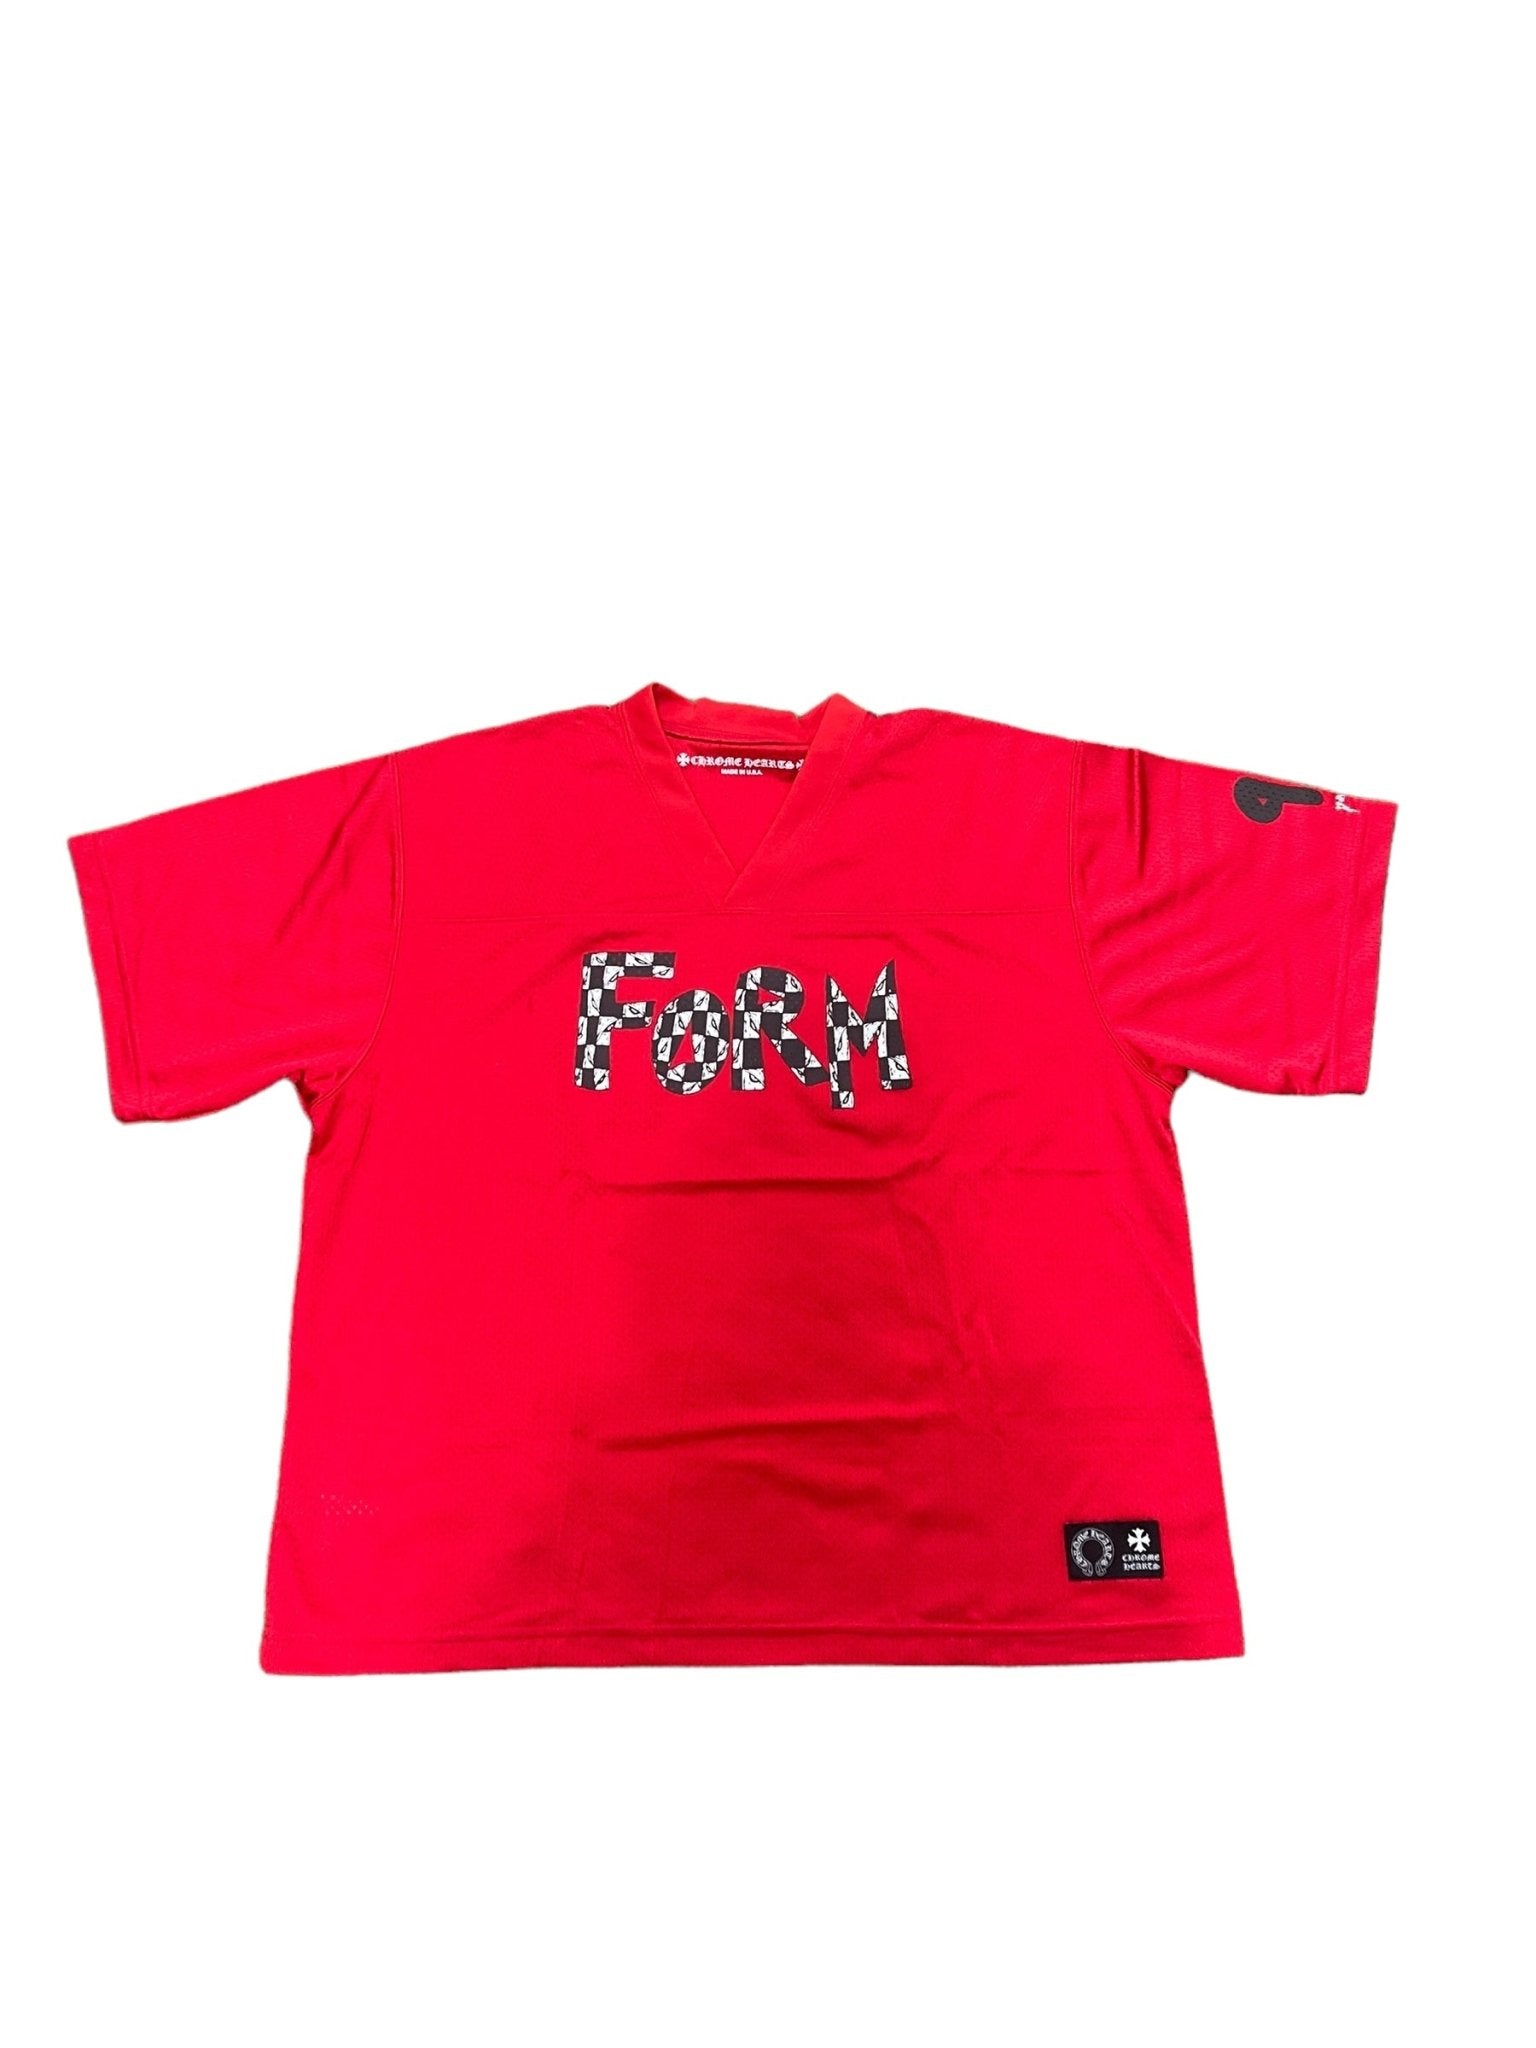 Chrome Hearts Matty Boy "FORM" Mesh S/S Stadium Jersey Red - Supra Sneakers